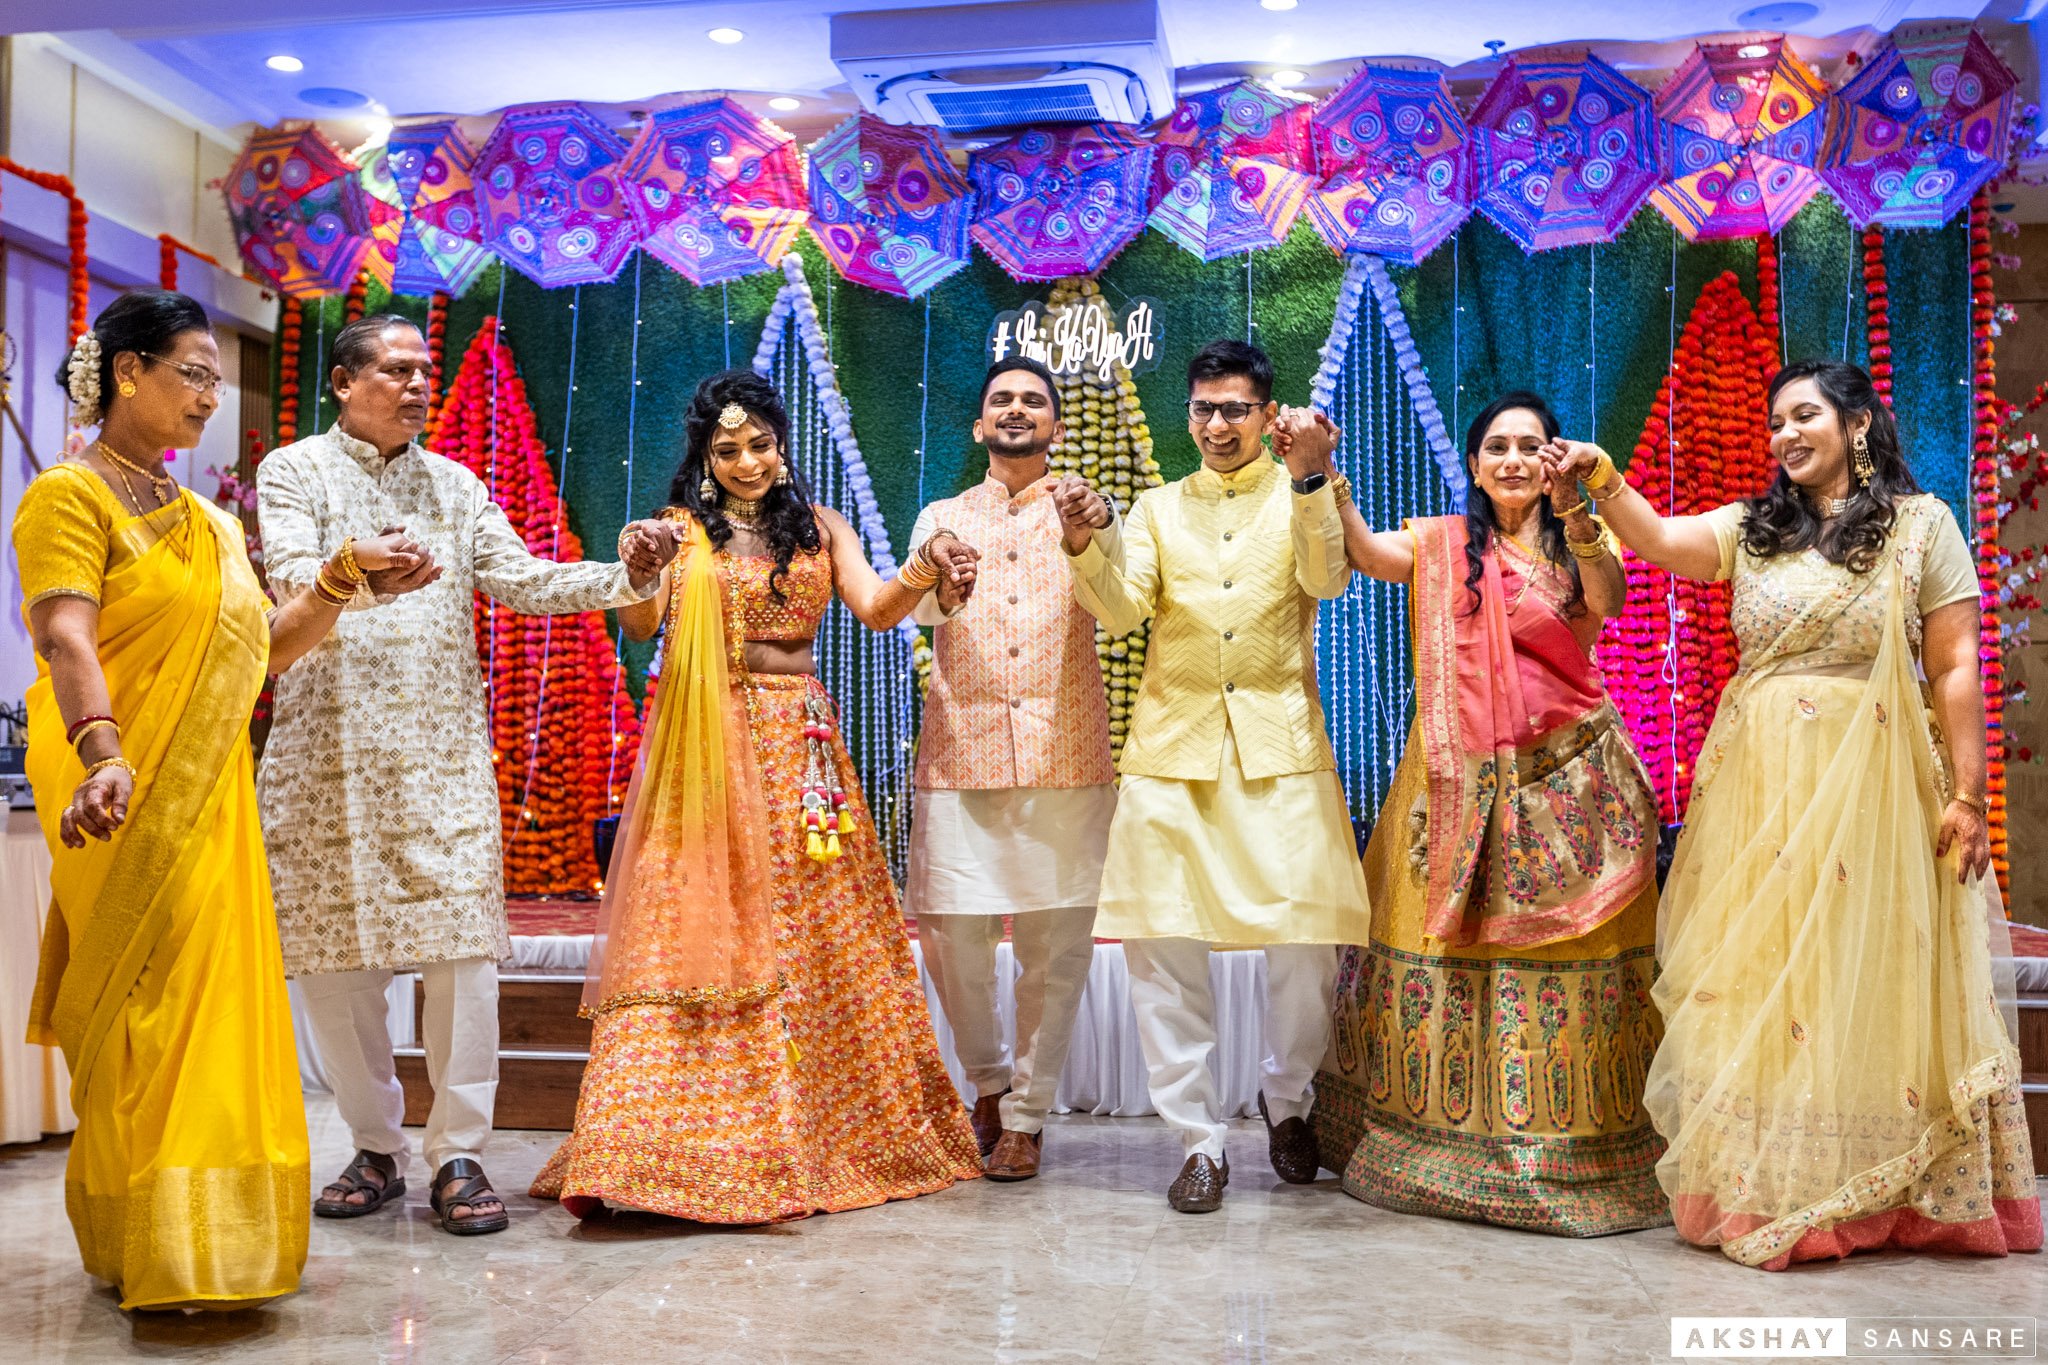 Lipika x Bhavya Compress Akshay Sansare Photography & Films Best wedding photographers in mumbai india-17.jpg